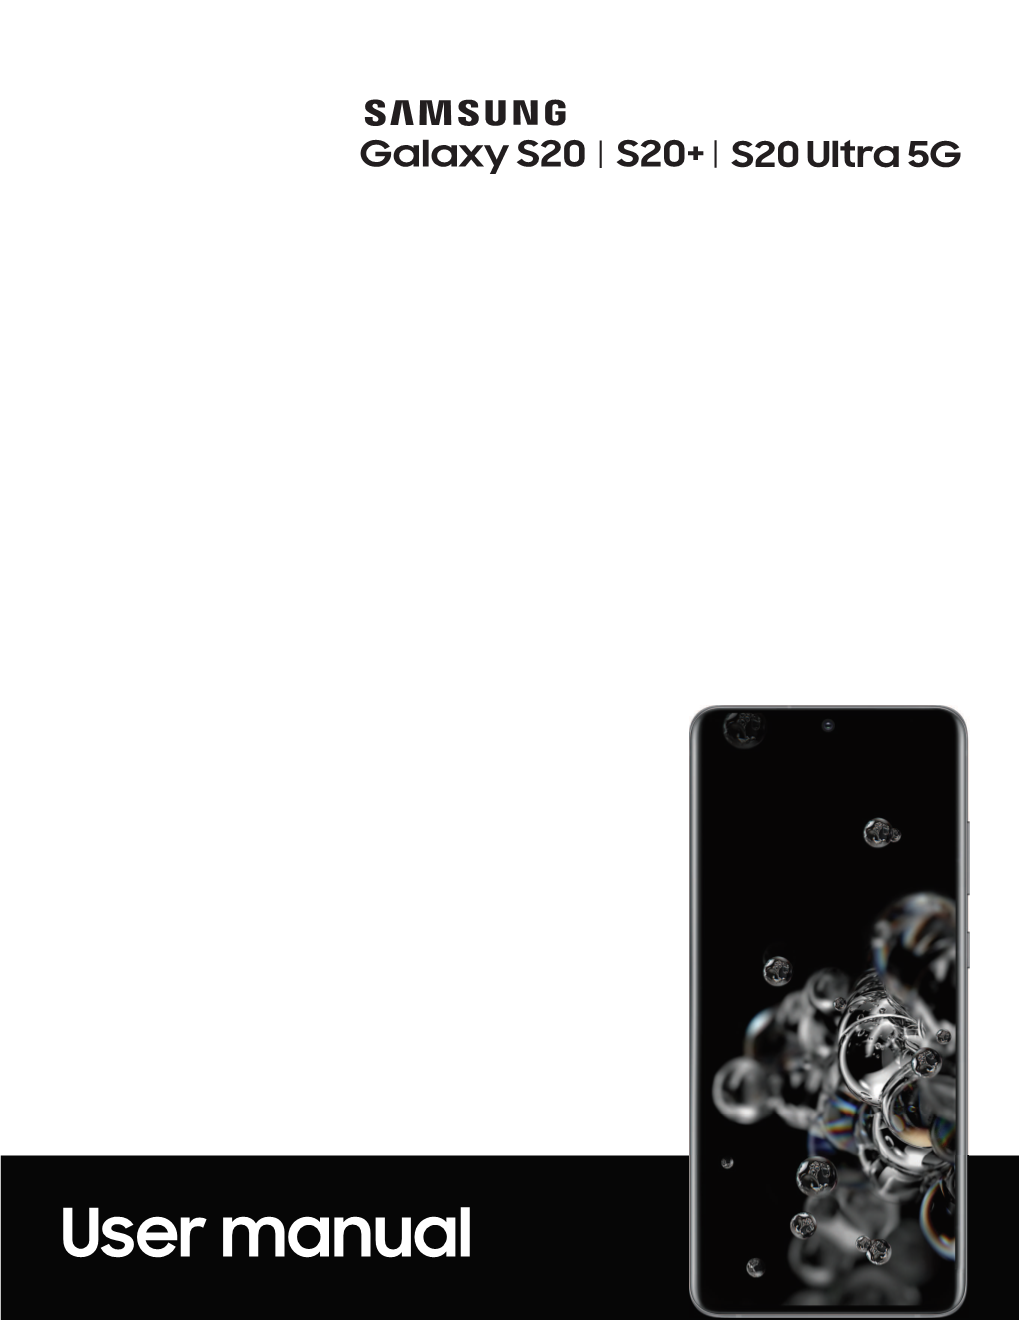 Samsung Galaxy S20|S20+|S20 Ultra 5G G981U|G986U